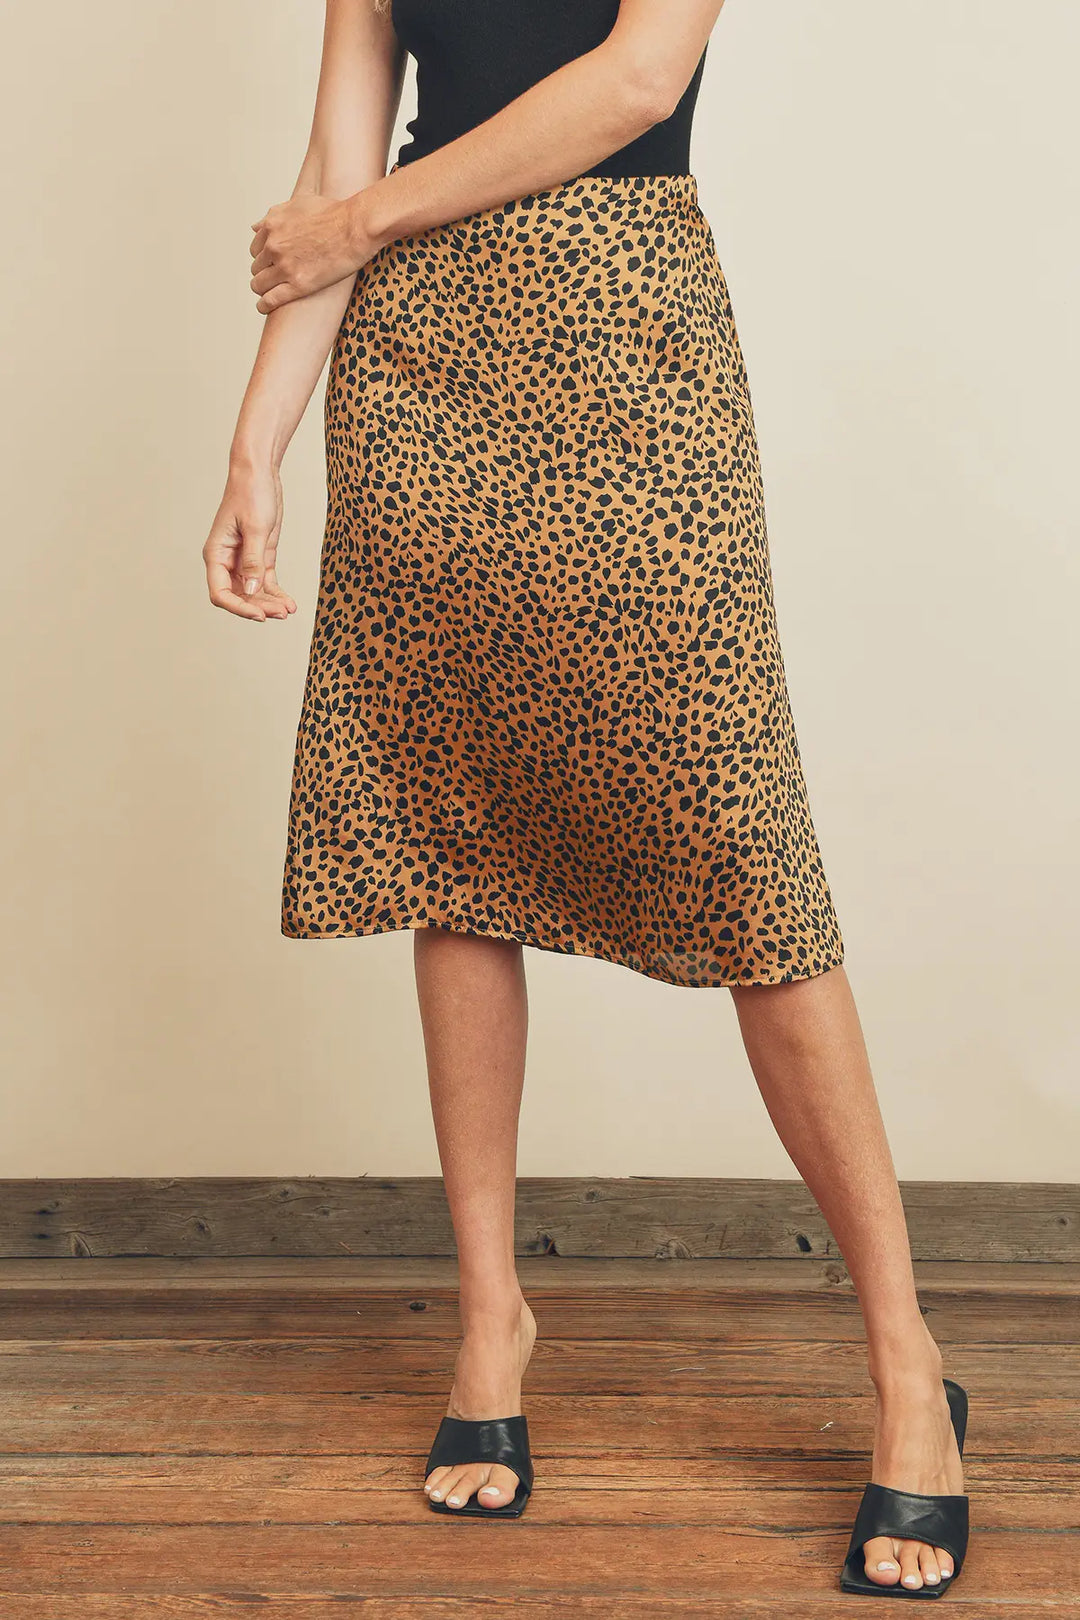 Feeling Cheetah-licious Skirt - Sienna Sky Boutique